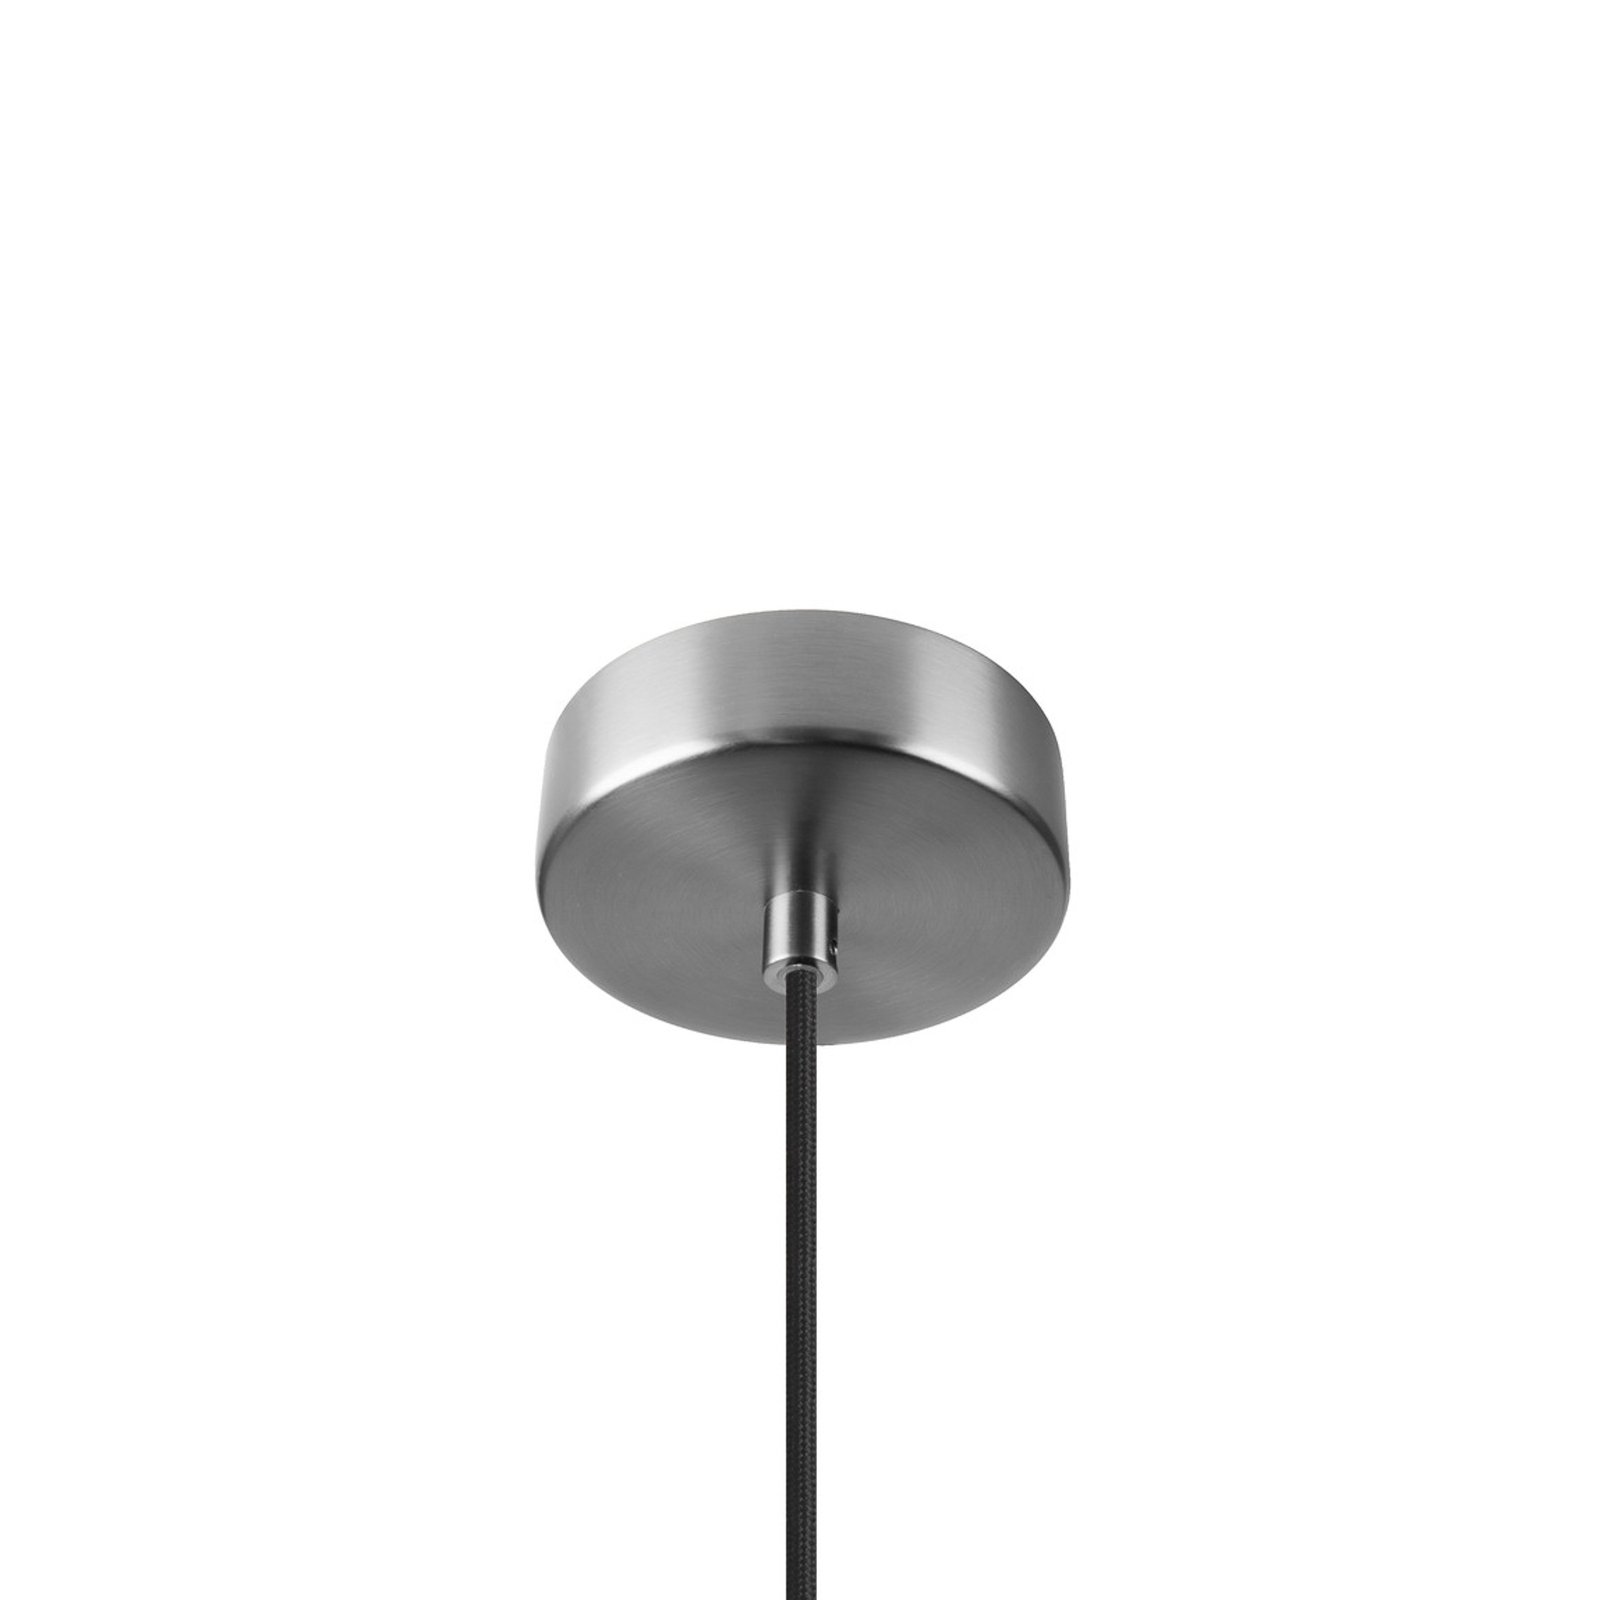 Pantilo Rope 27 lampada a sospensione, colore argento, acciaio, Ø 27 cm